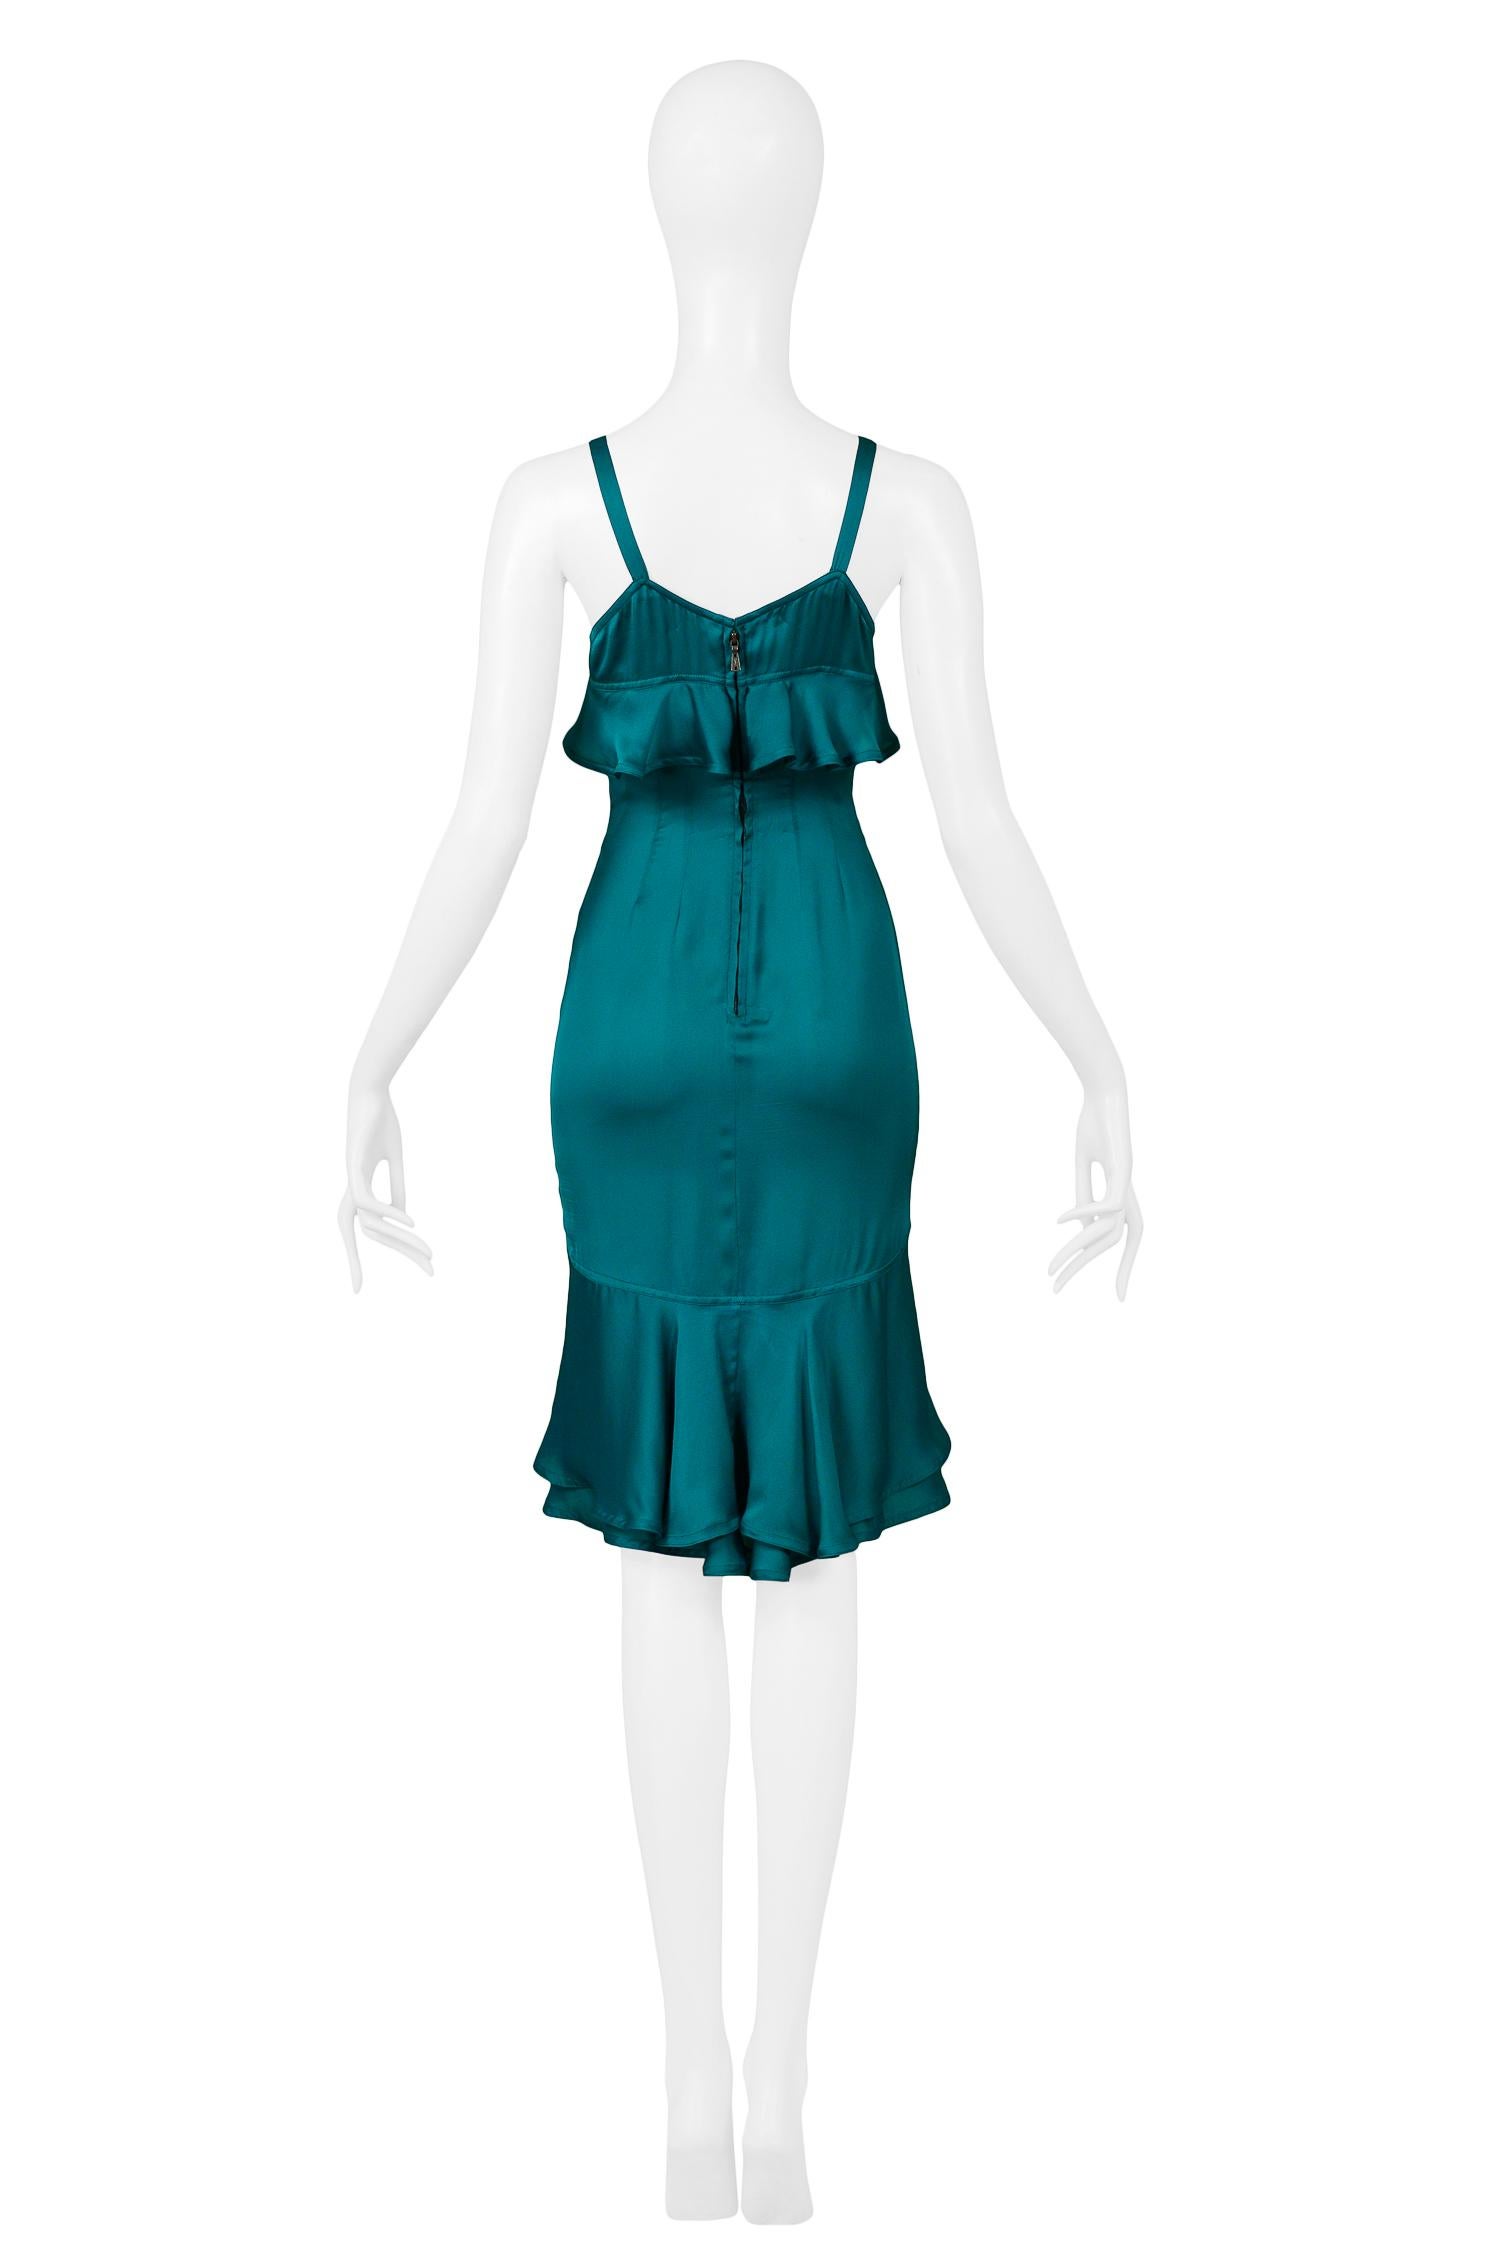 Vintage Tom Ford for Yves Saint Laurent Teal Green Silk Ruffle Dress 2003 1